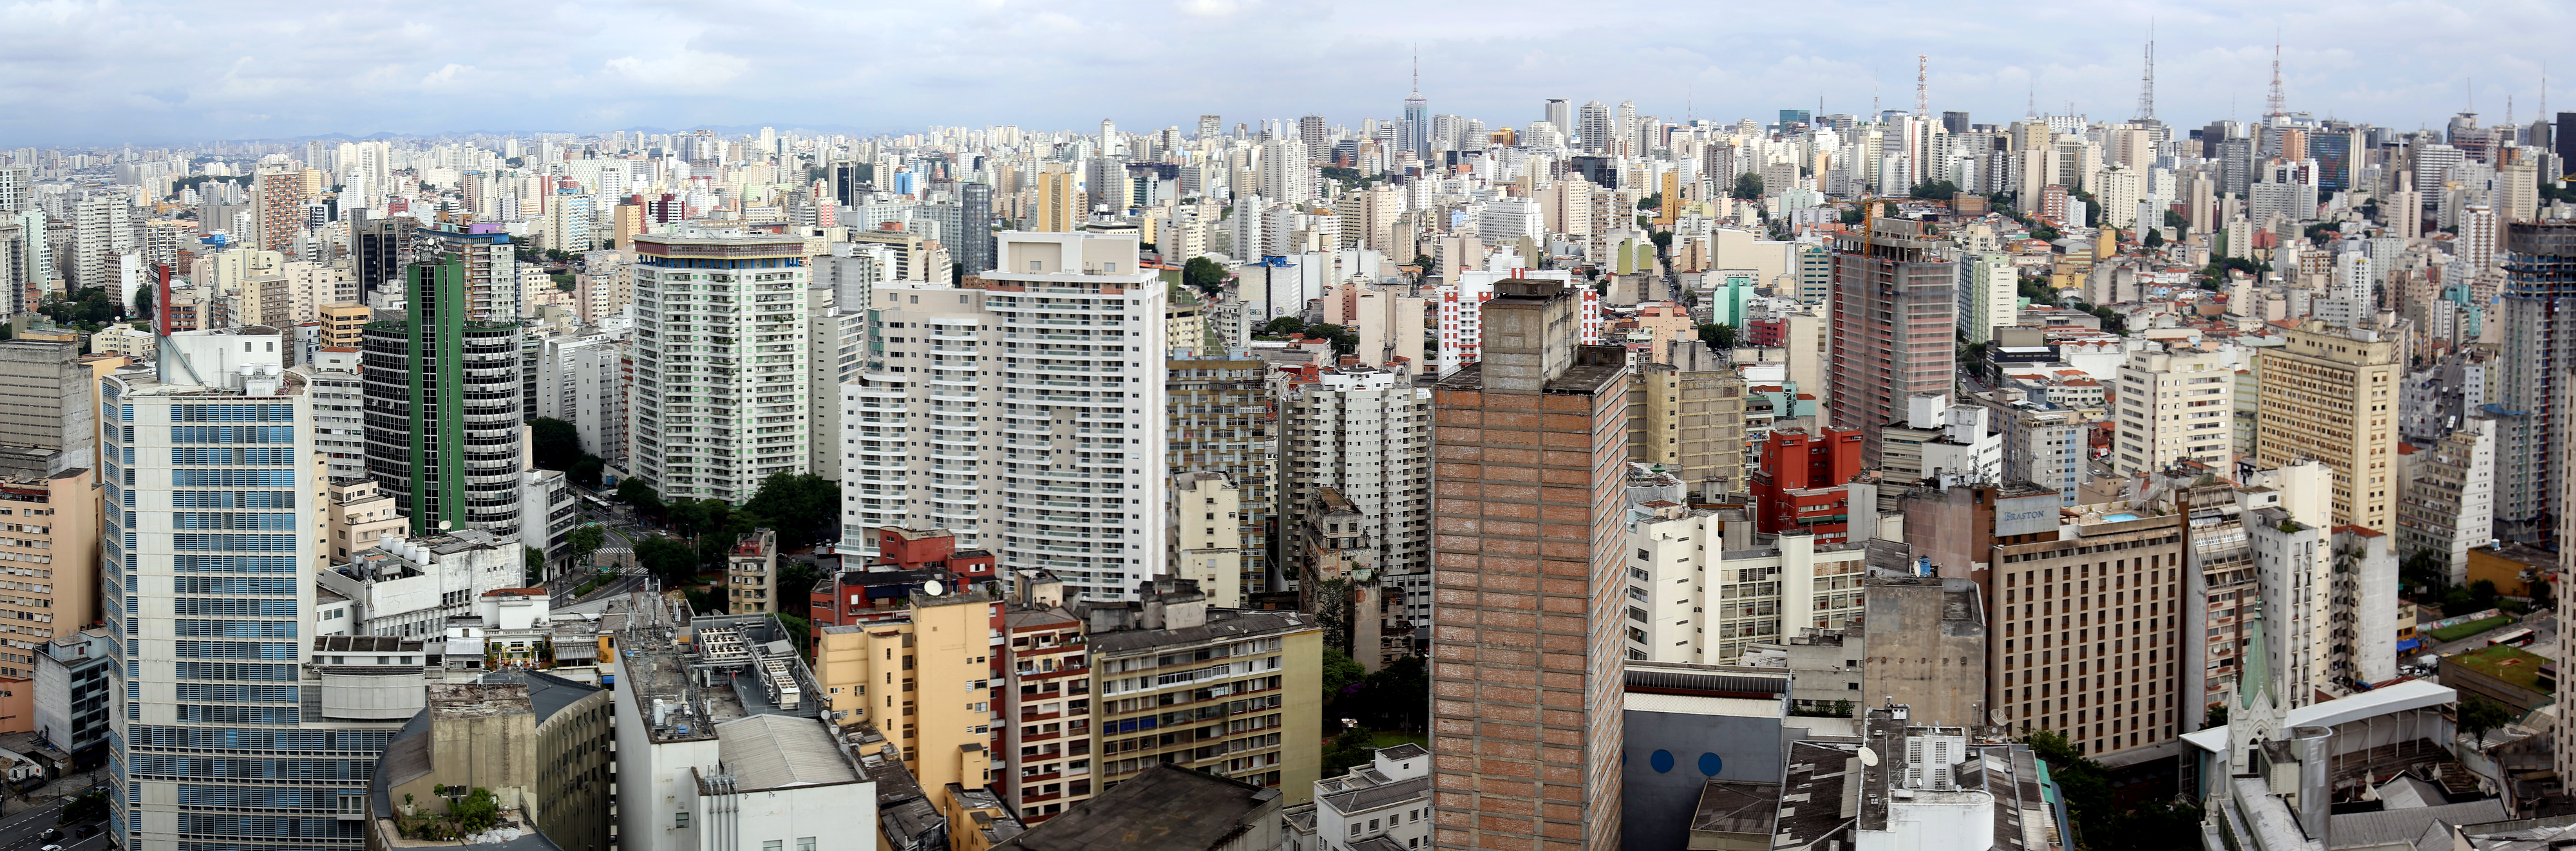 Cityscape of São Paulo